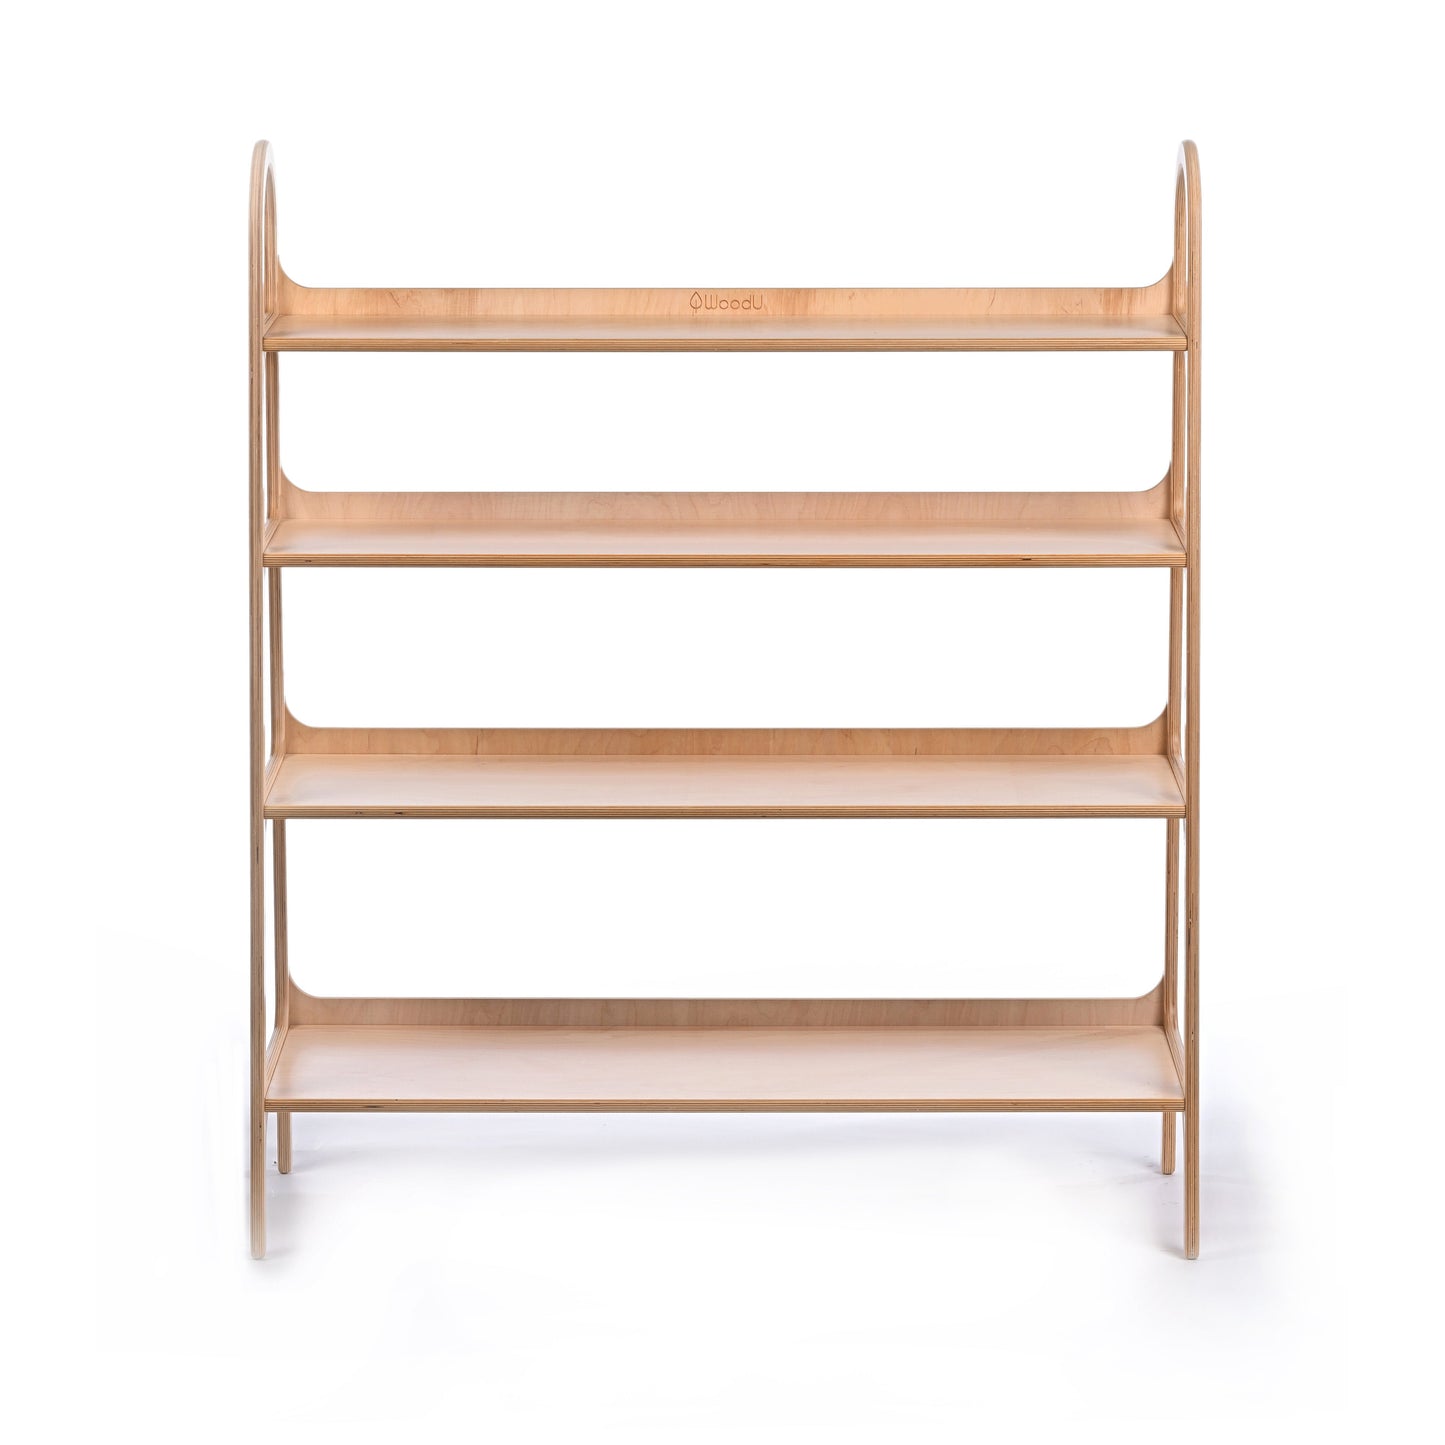 OUTLET The WoodU Shelf - 4 shelves